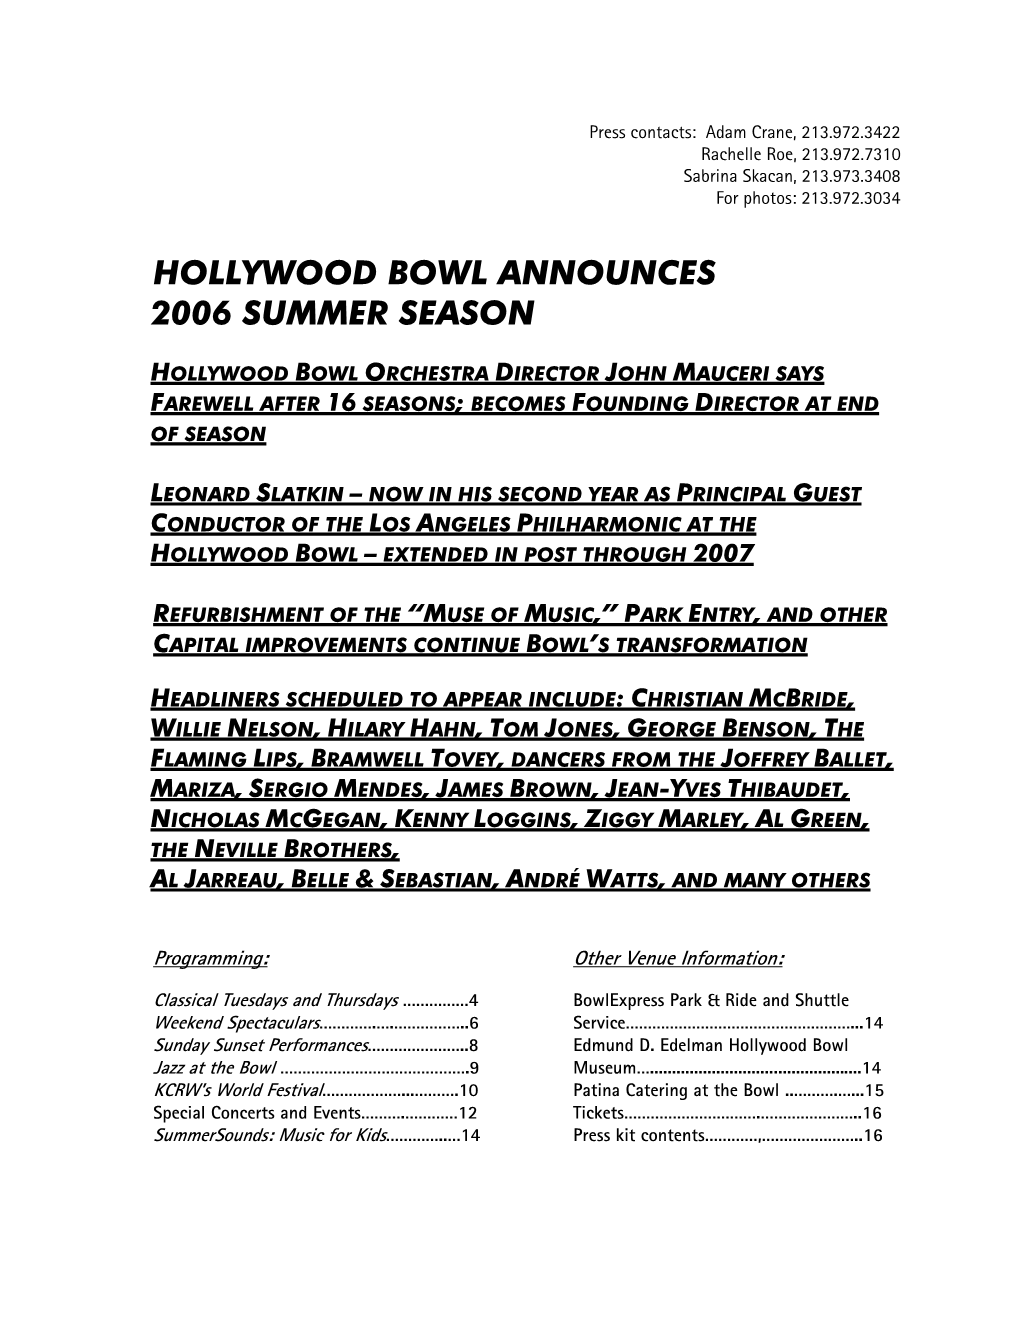 Hollywood Bowl Announces Summer Season 2004